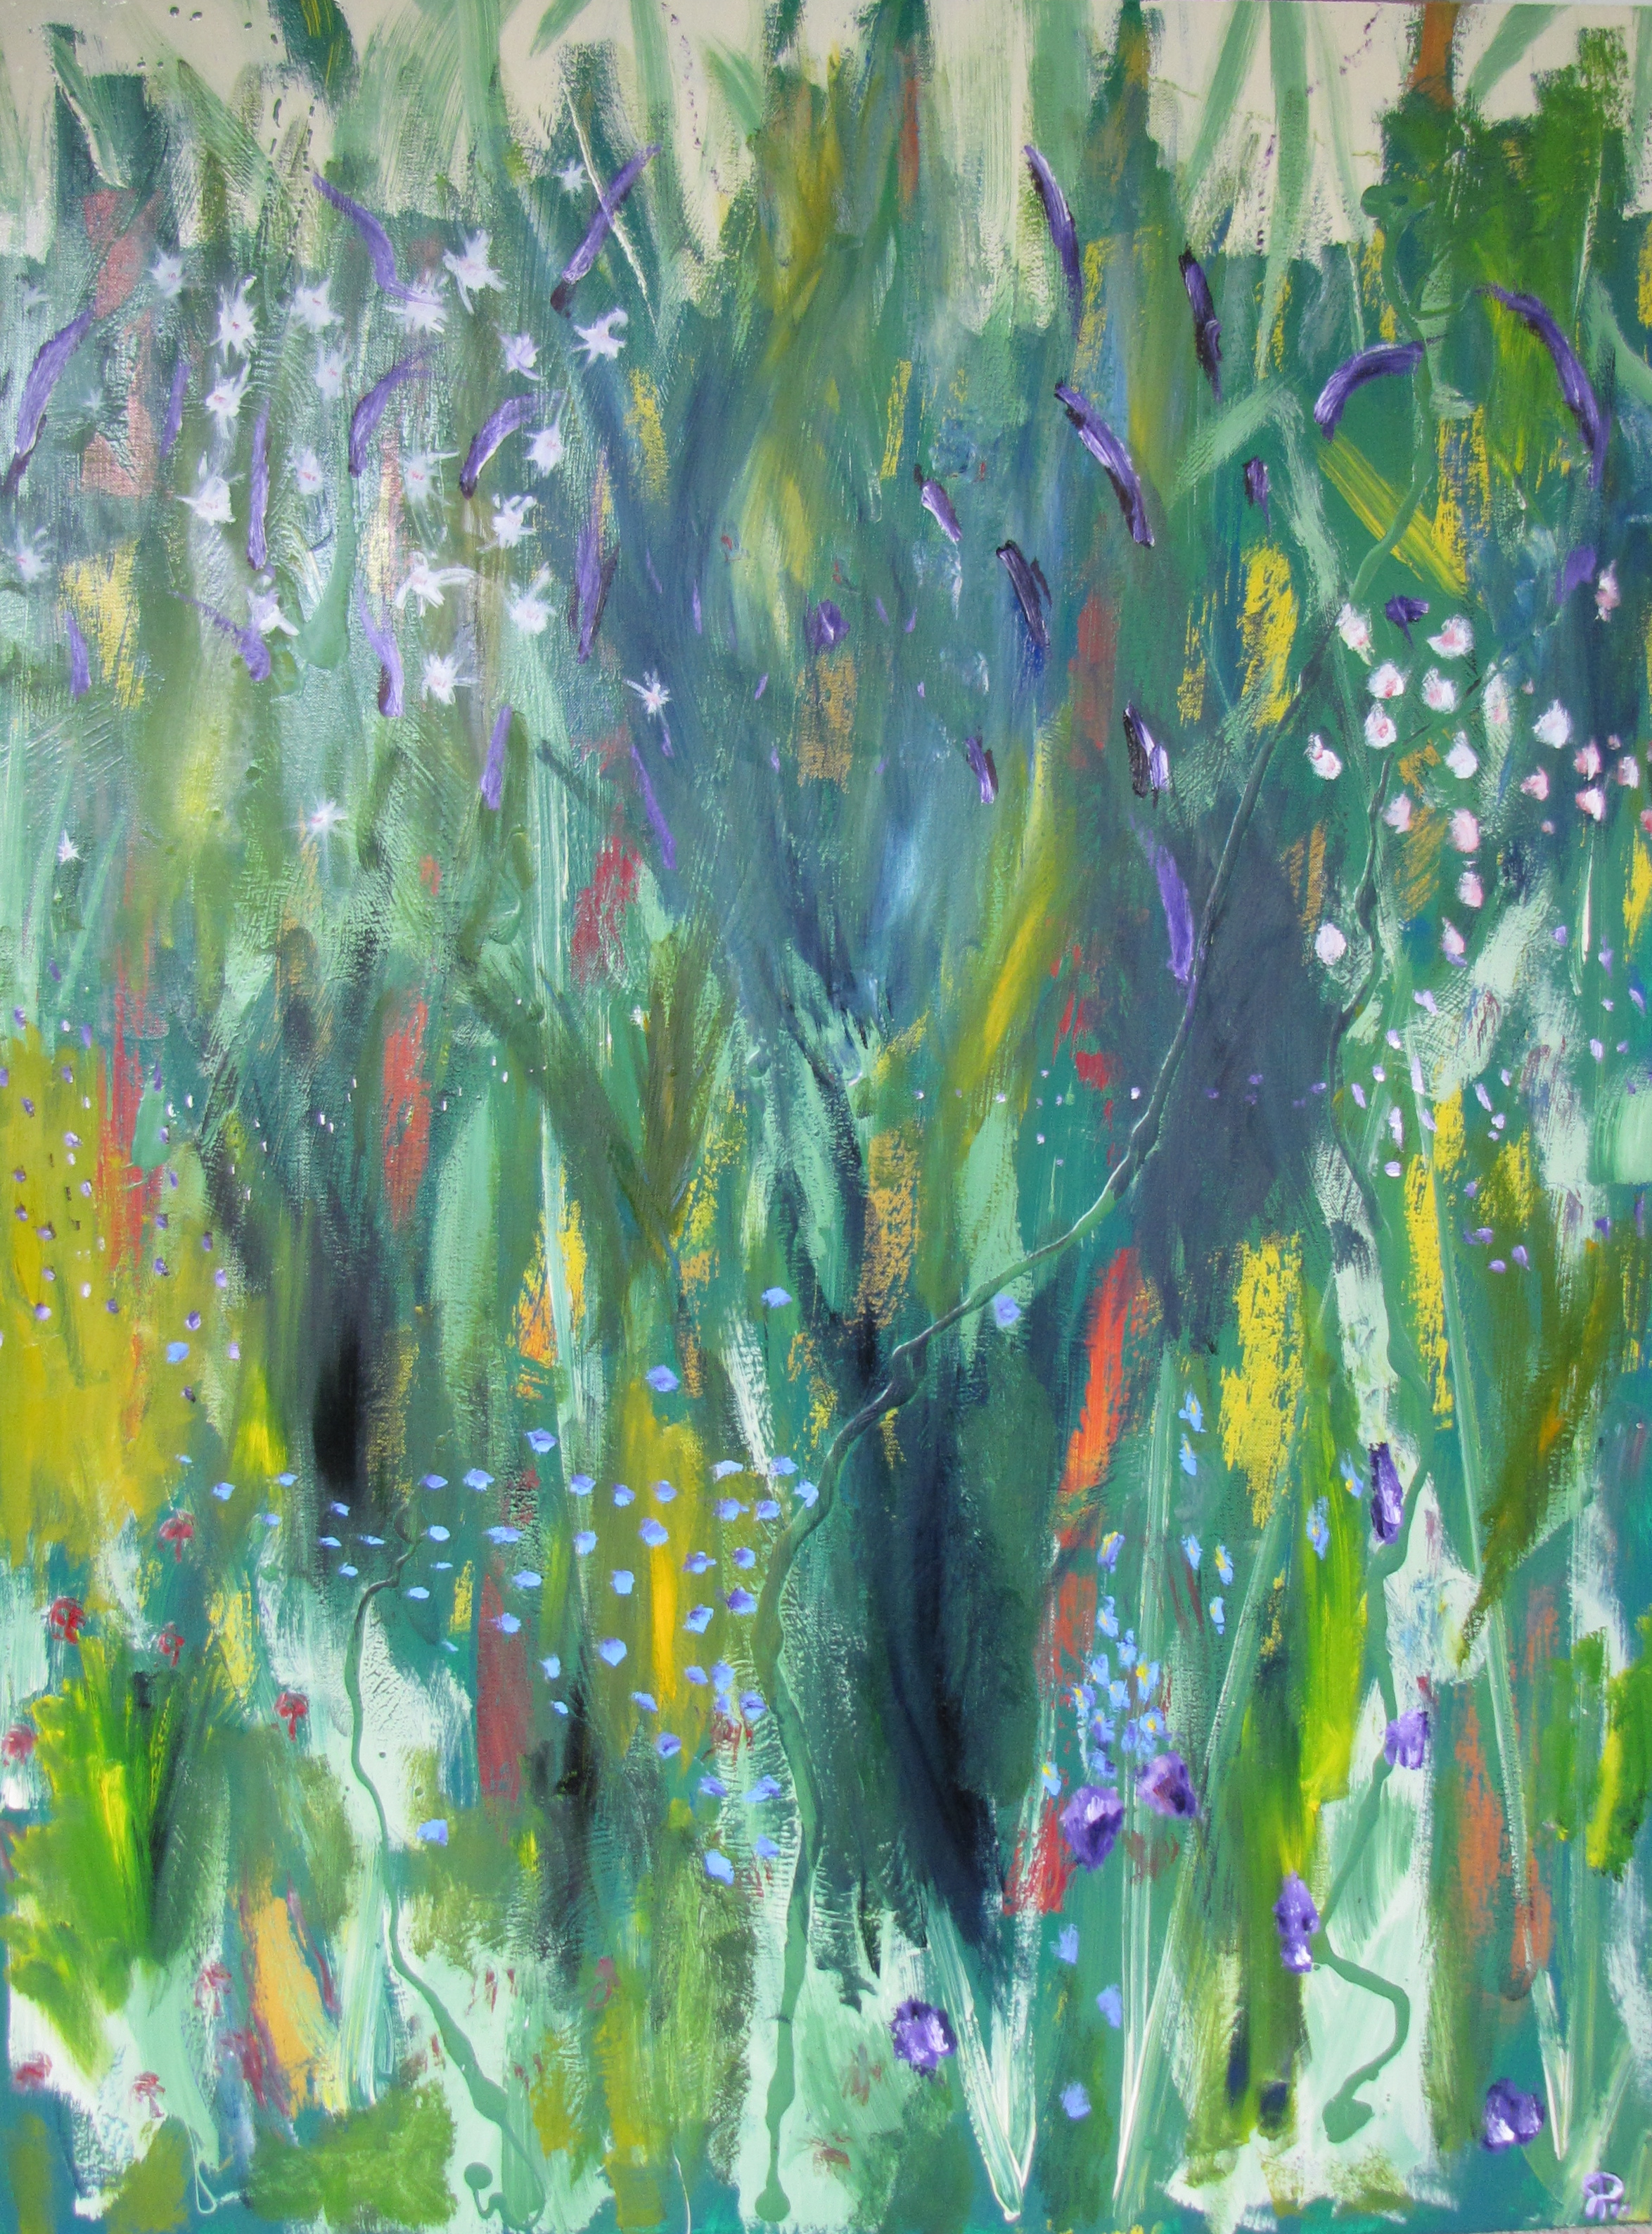 Sea Meadow, Russell Steven Powell oil on canvas, 36x48